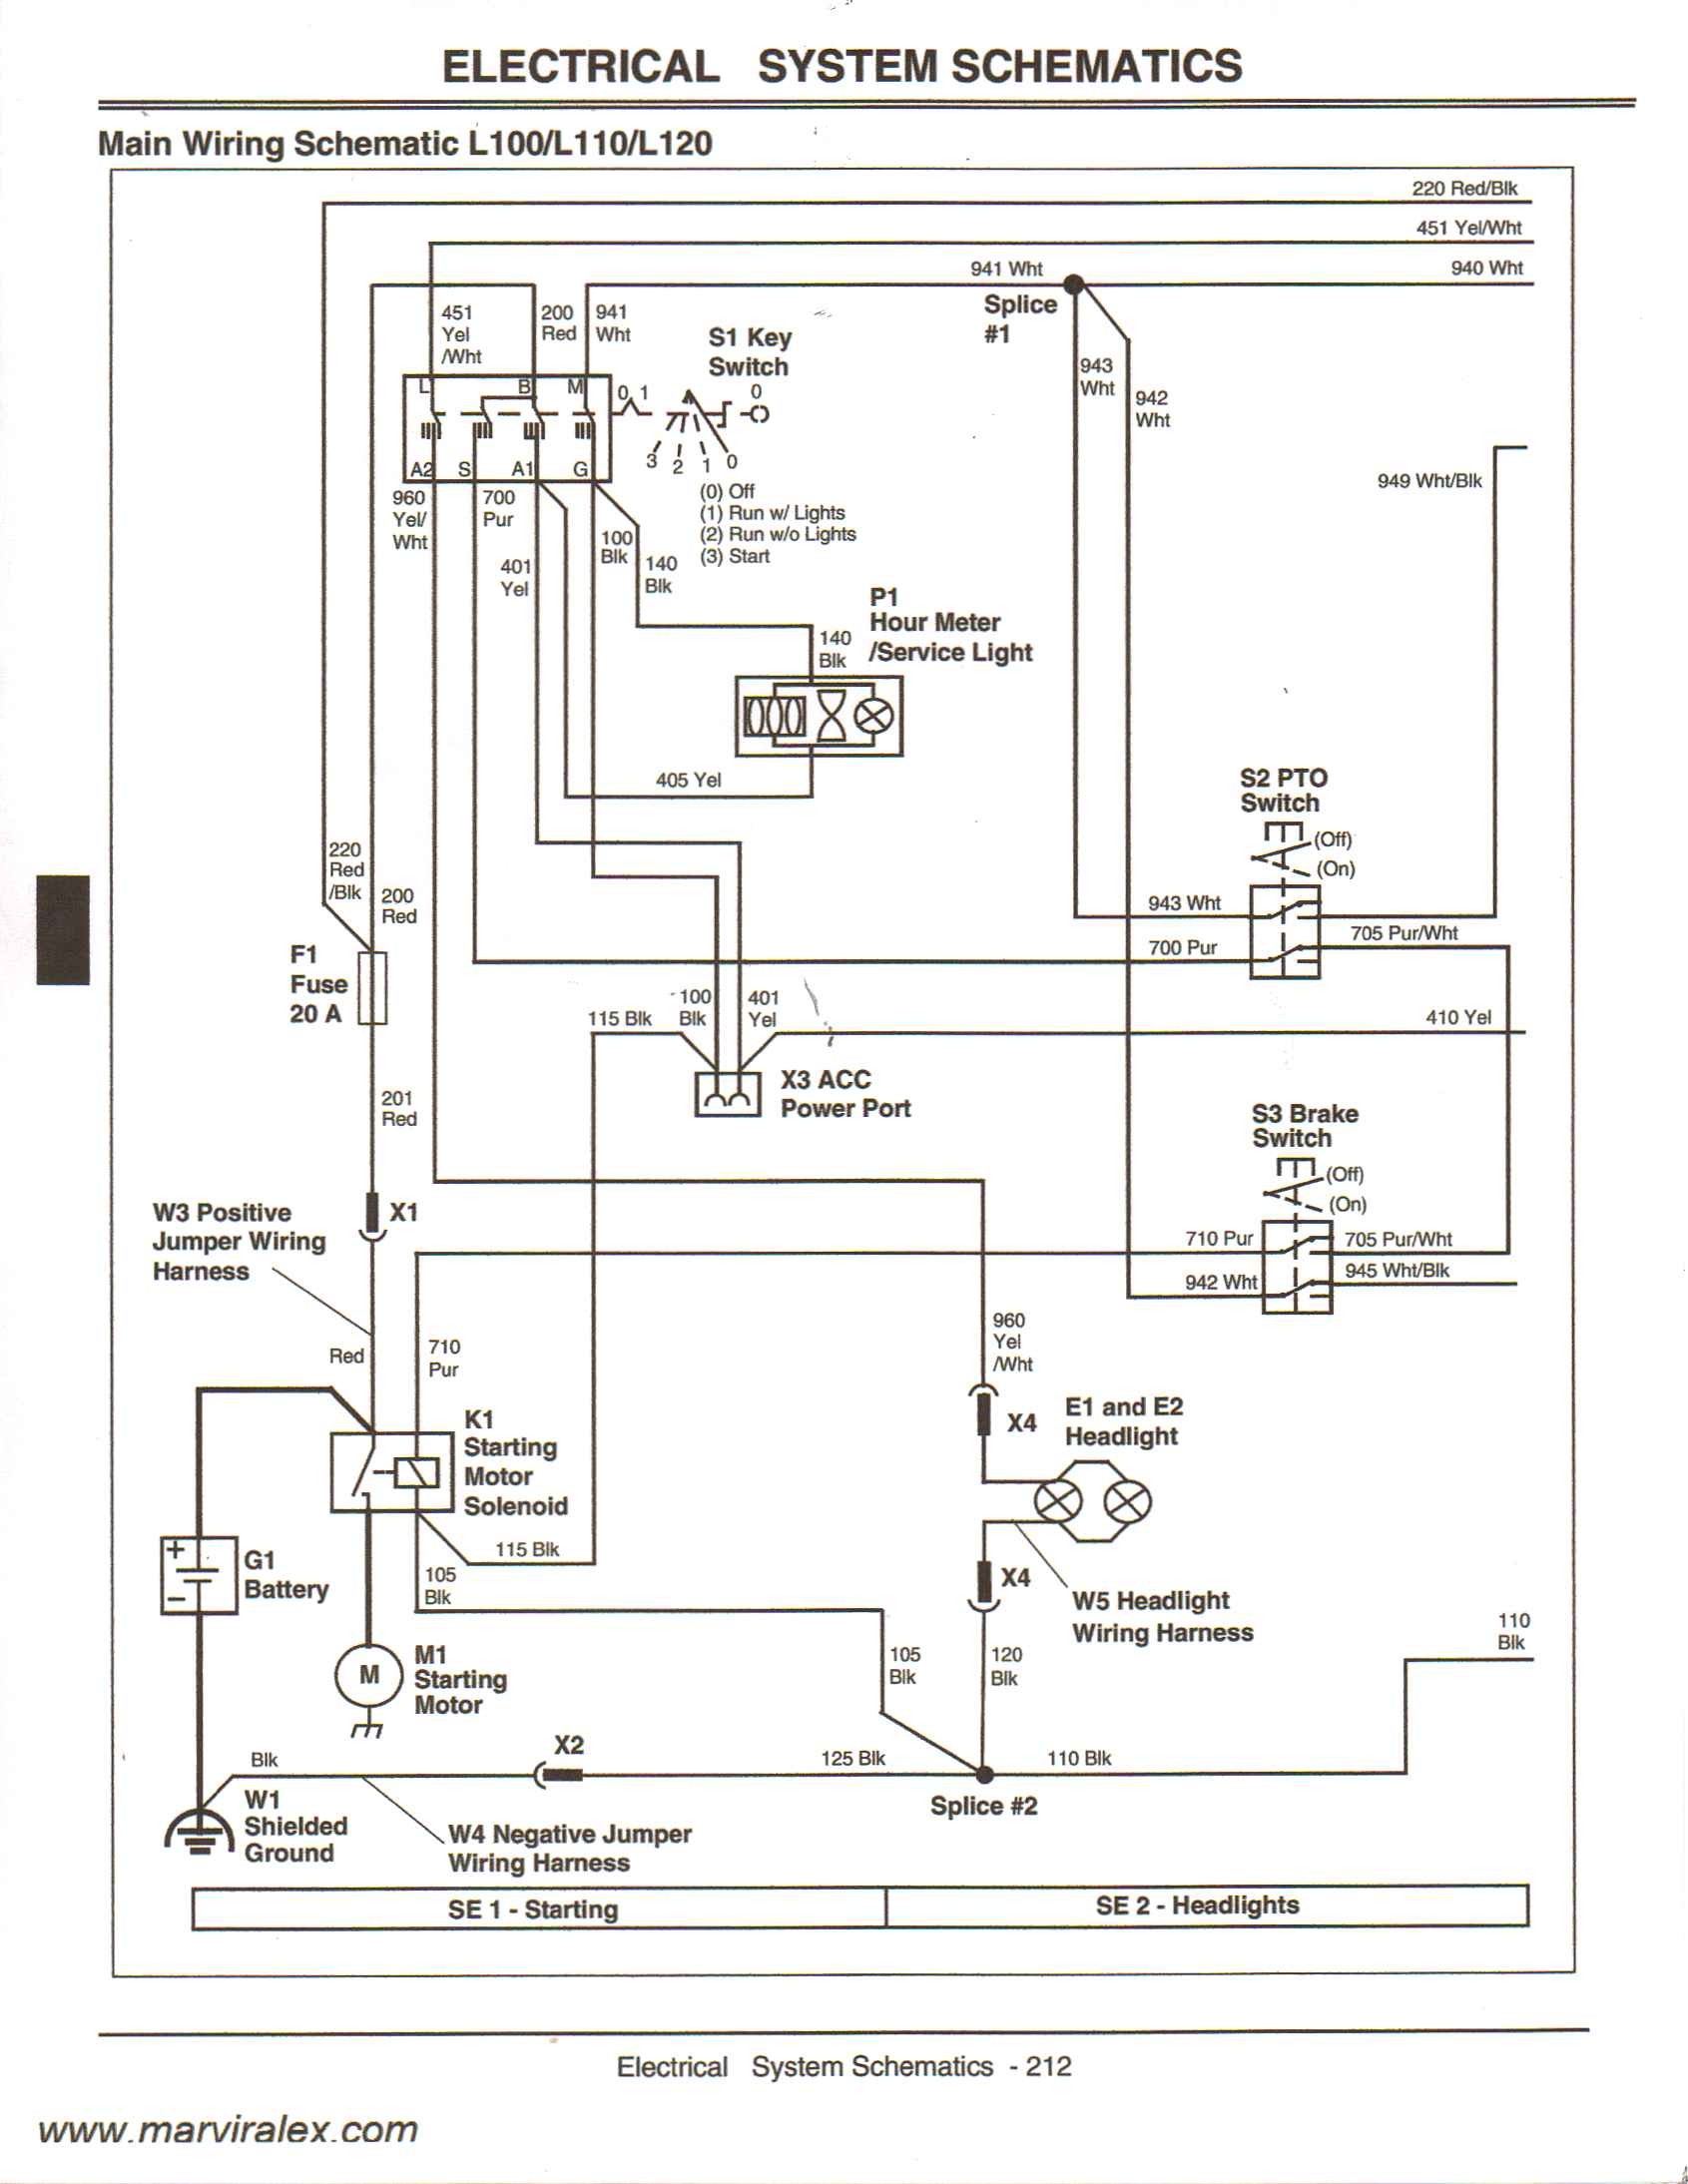 John Deere Gatoe Ts 4x 2 Wire Diagram Diagram] John Deere Gator 6×4 Wiring Diagram Picture Full Of John Deere Gatoe Ts 4x 2 Wire Diagram